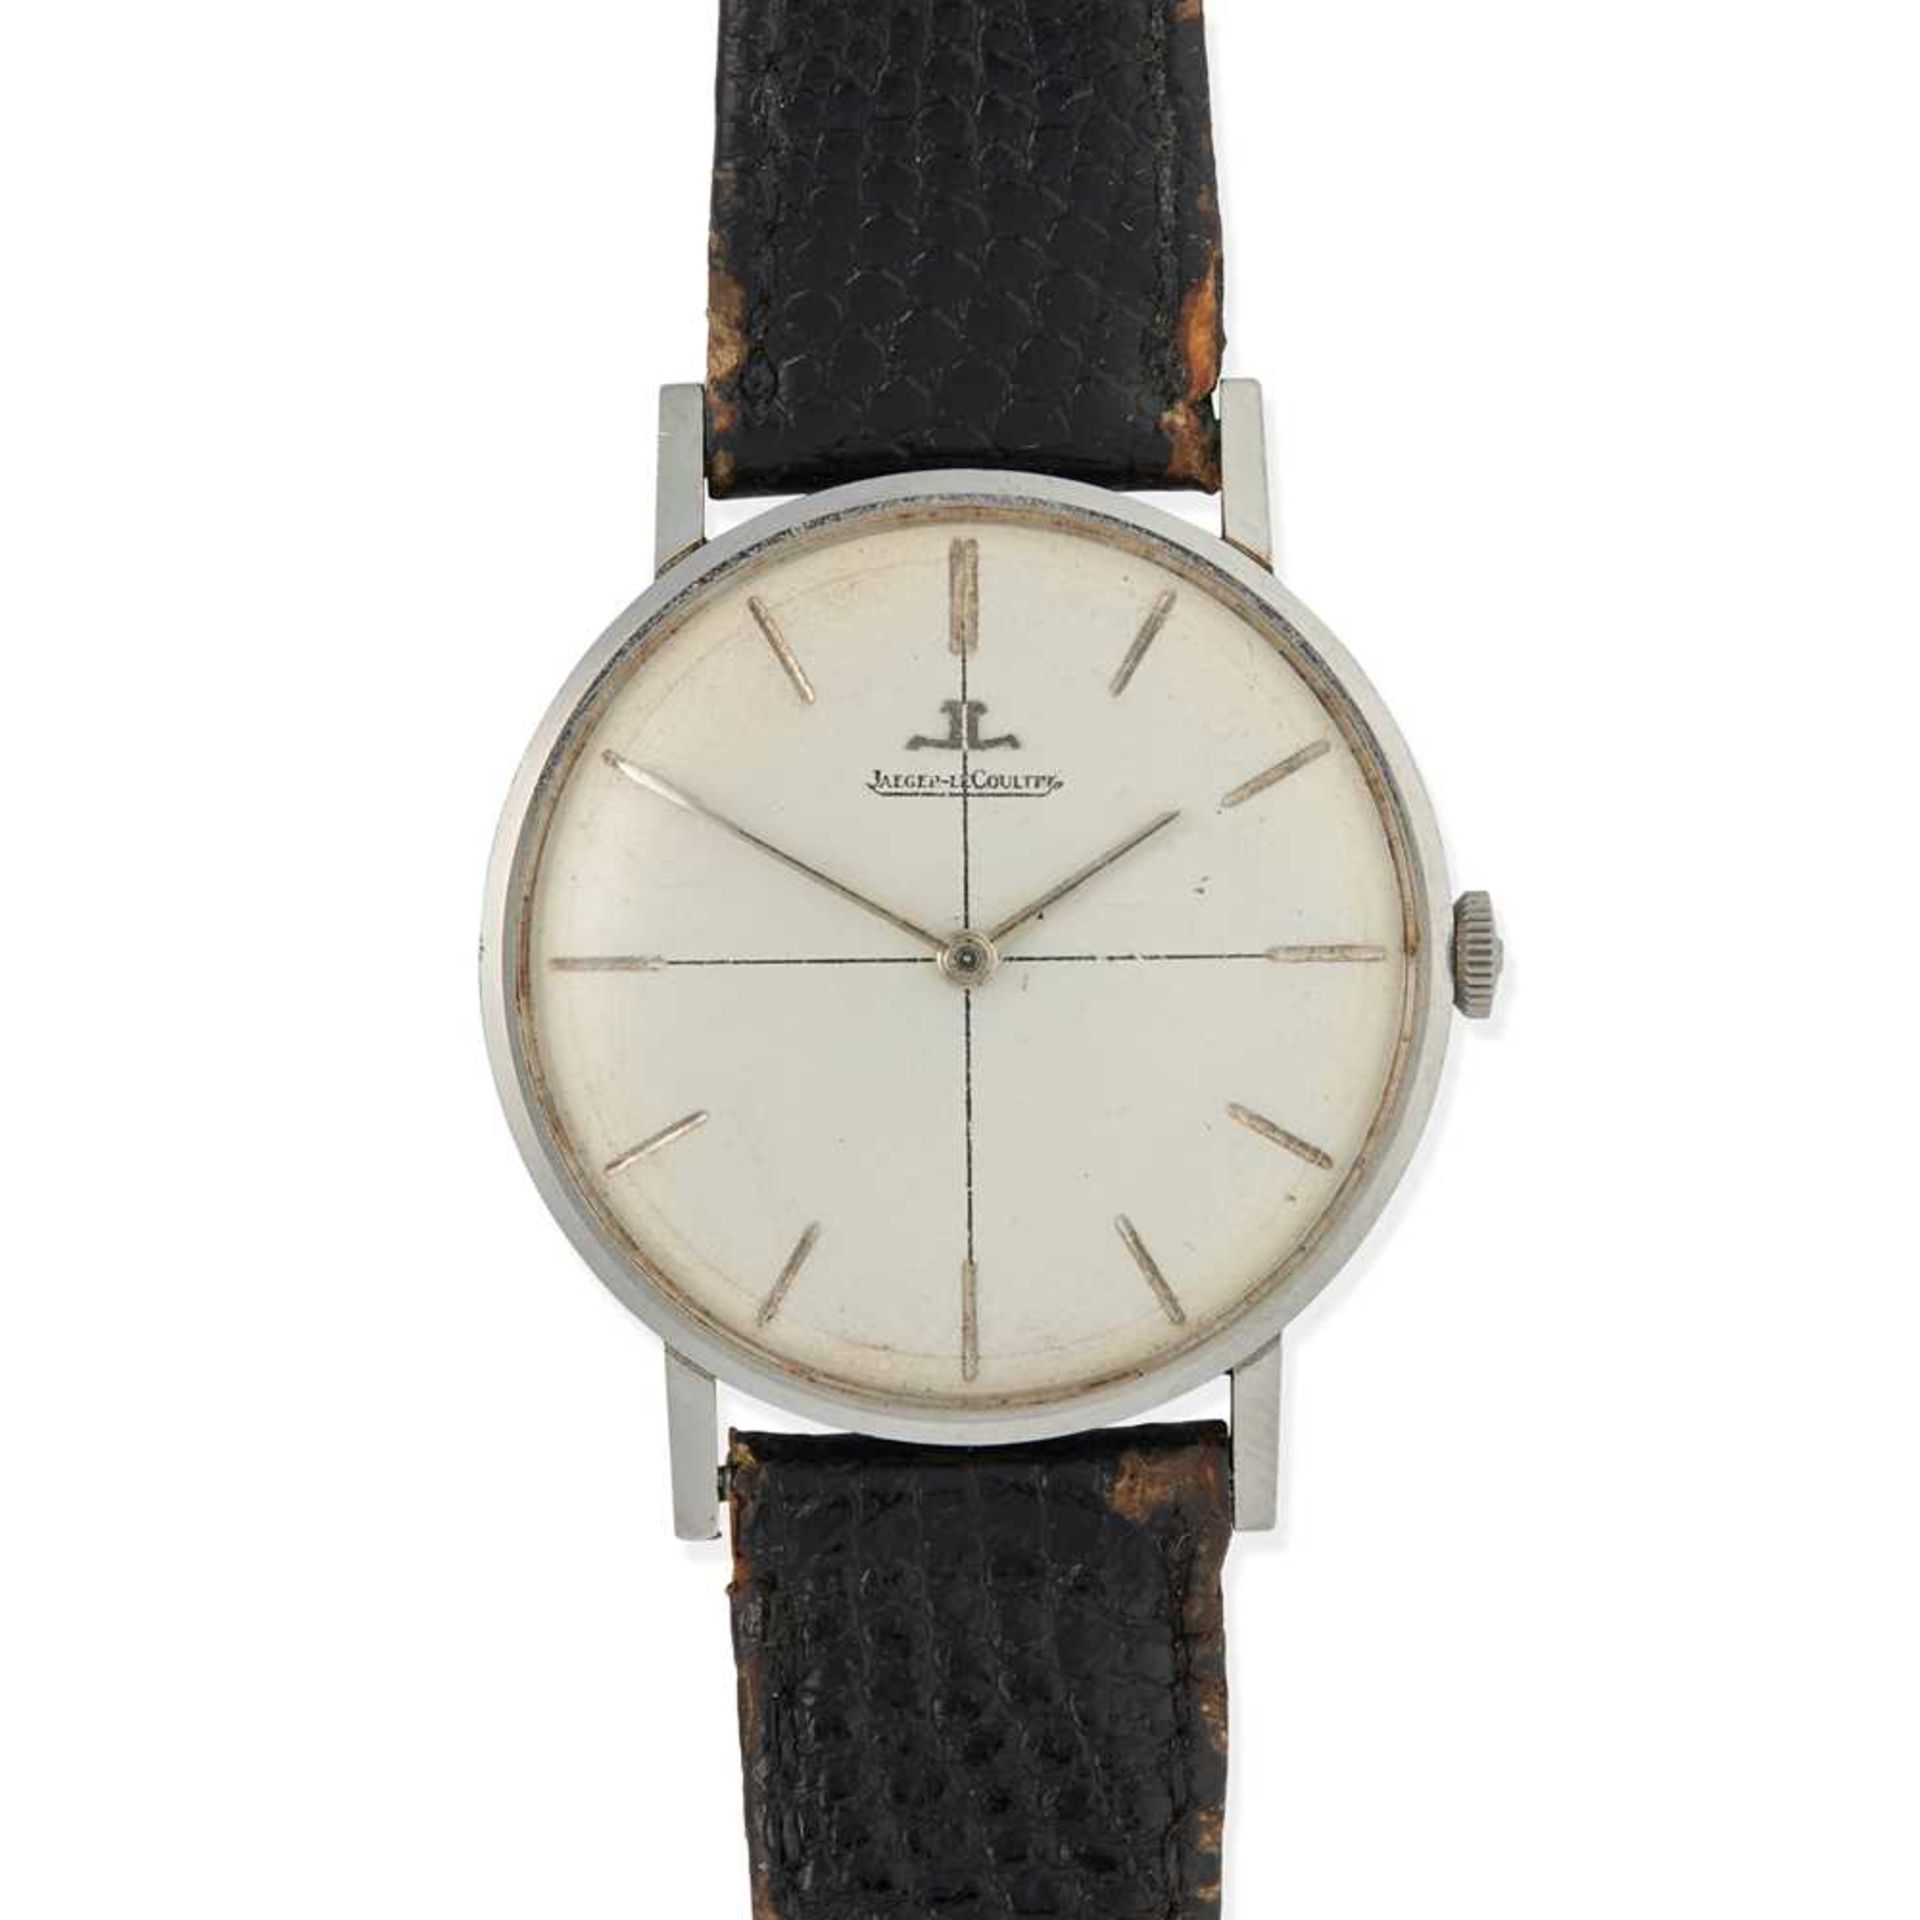 Two gentleman's mid-century wrist watches - Image 2 of 13